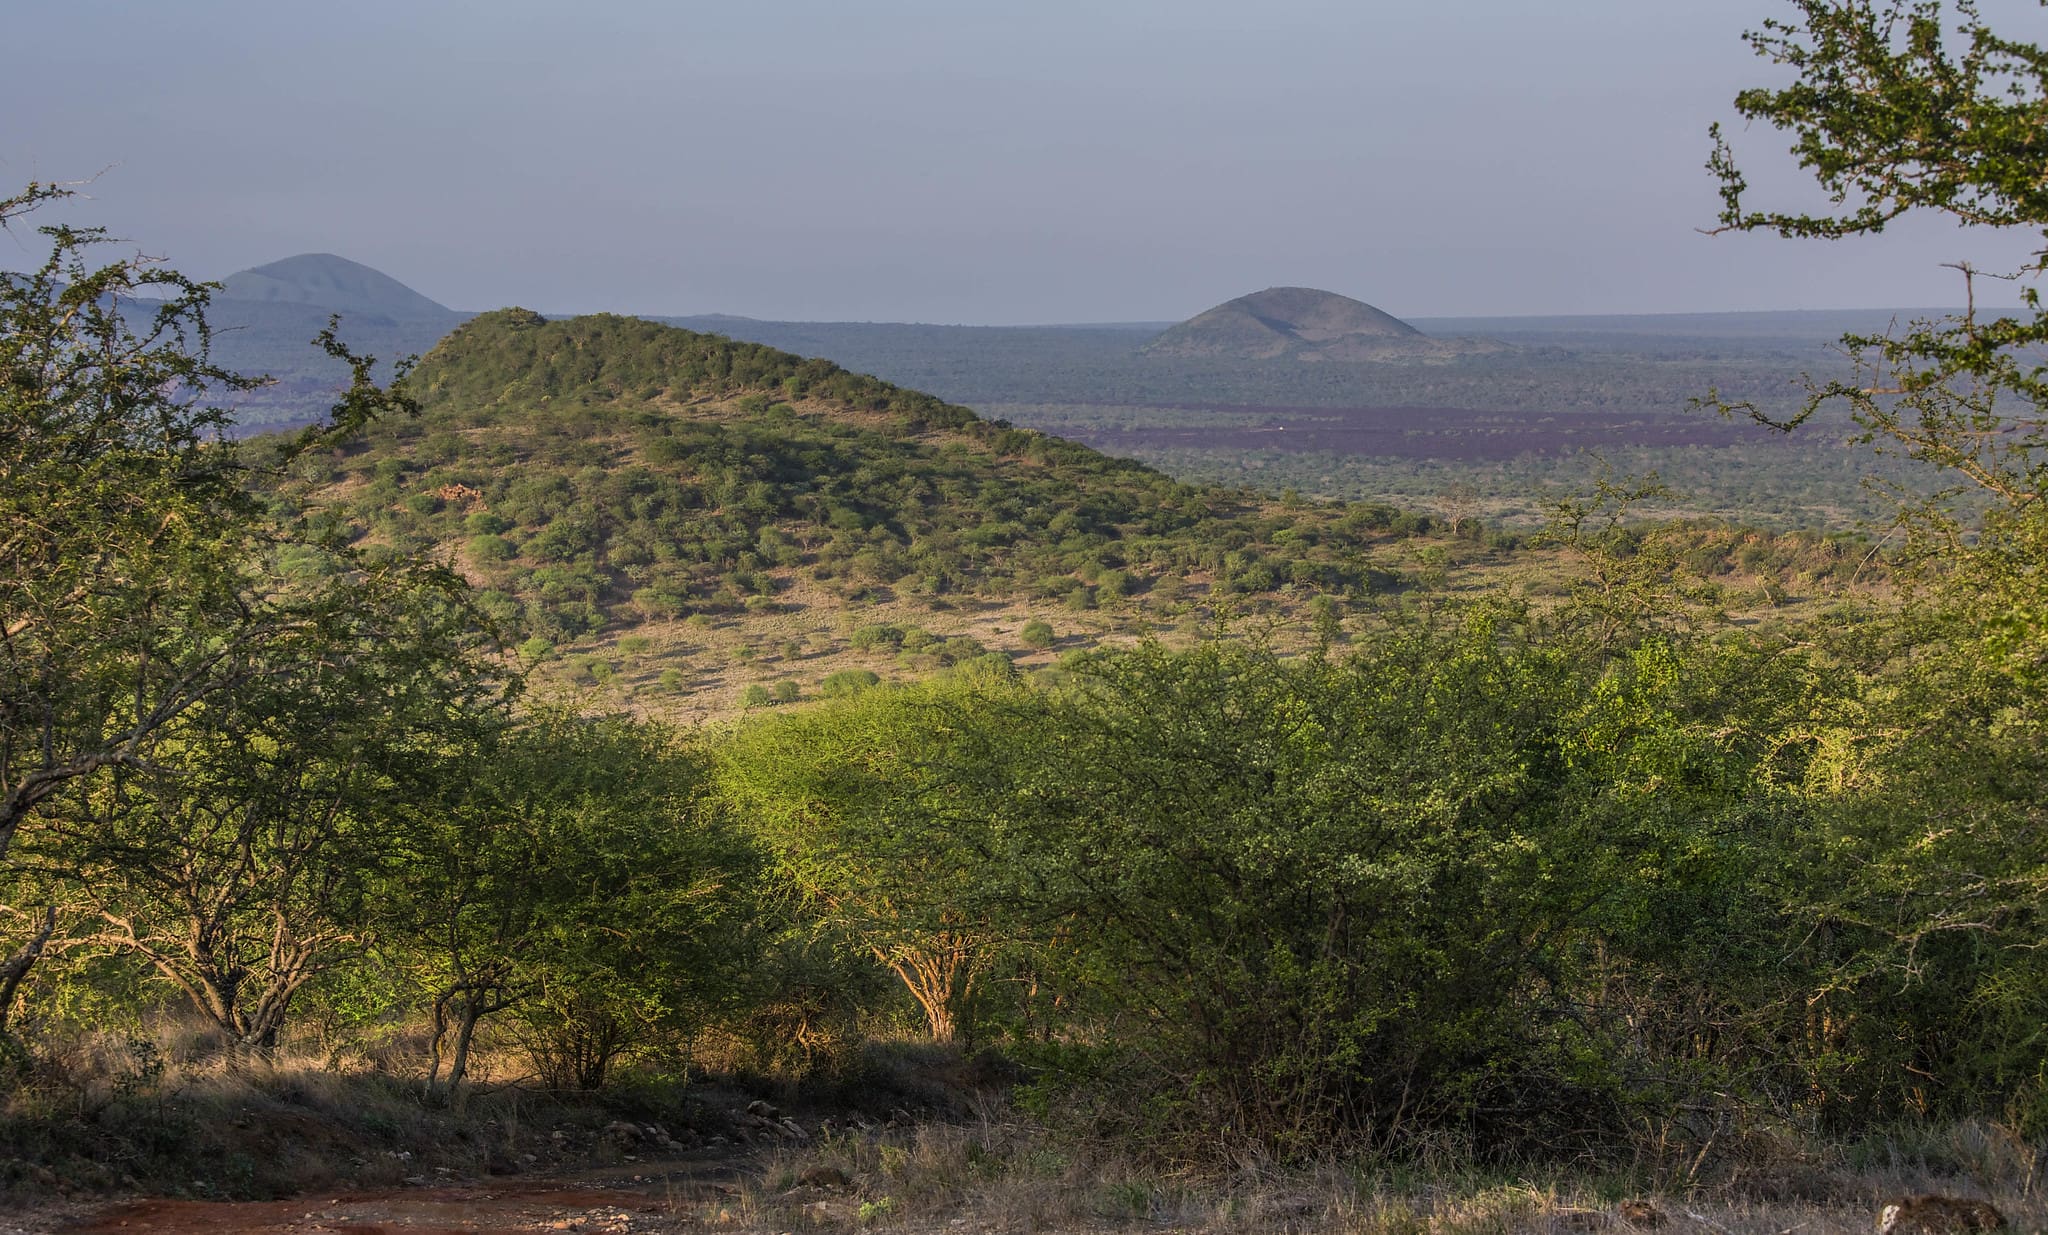 Apple has partnered with Conservation International to fund restoration in Kenya’s Chyulu Hills.